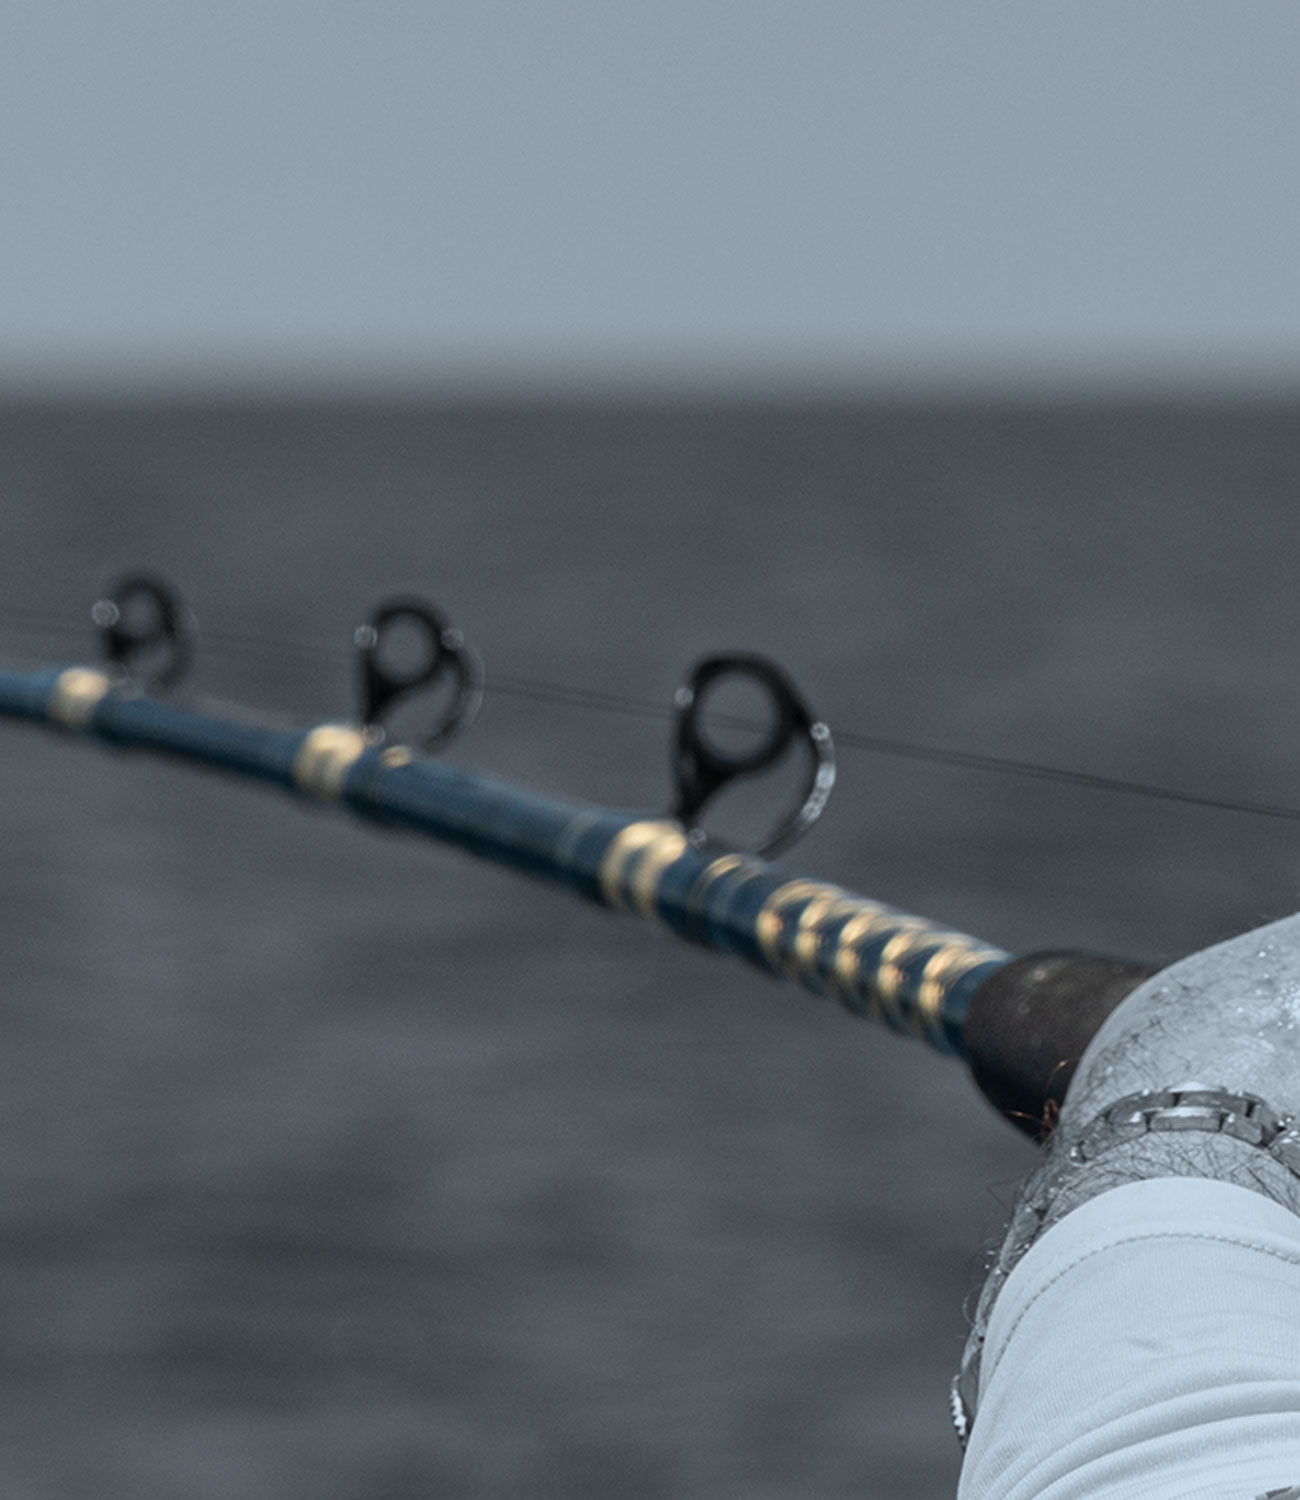  Lonkiktik Fishing Rod Guides and Tips, 36PCS Rotating